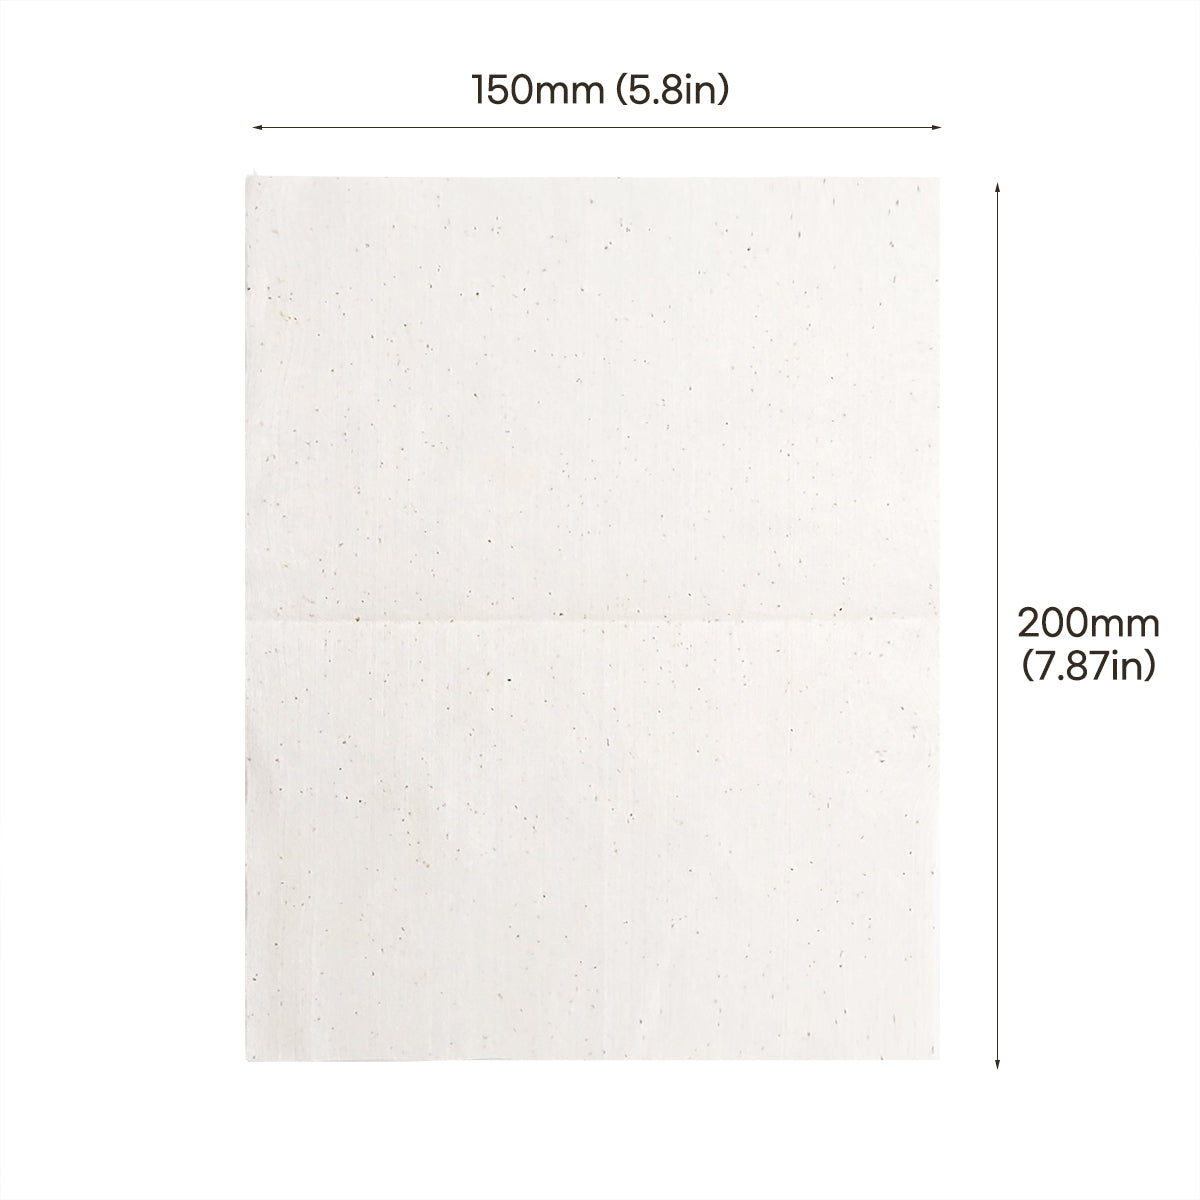 Unbleached & Non-fluorescent Large Size Cotton Sheet 80 Count - Soft Type